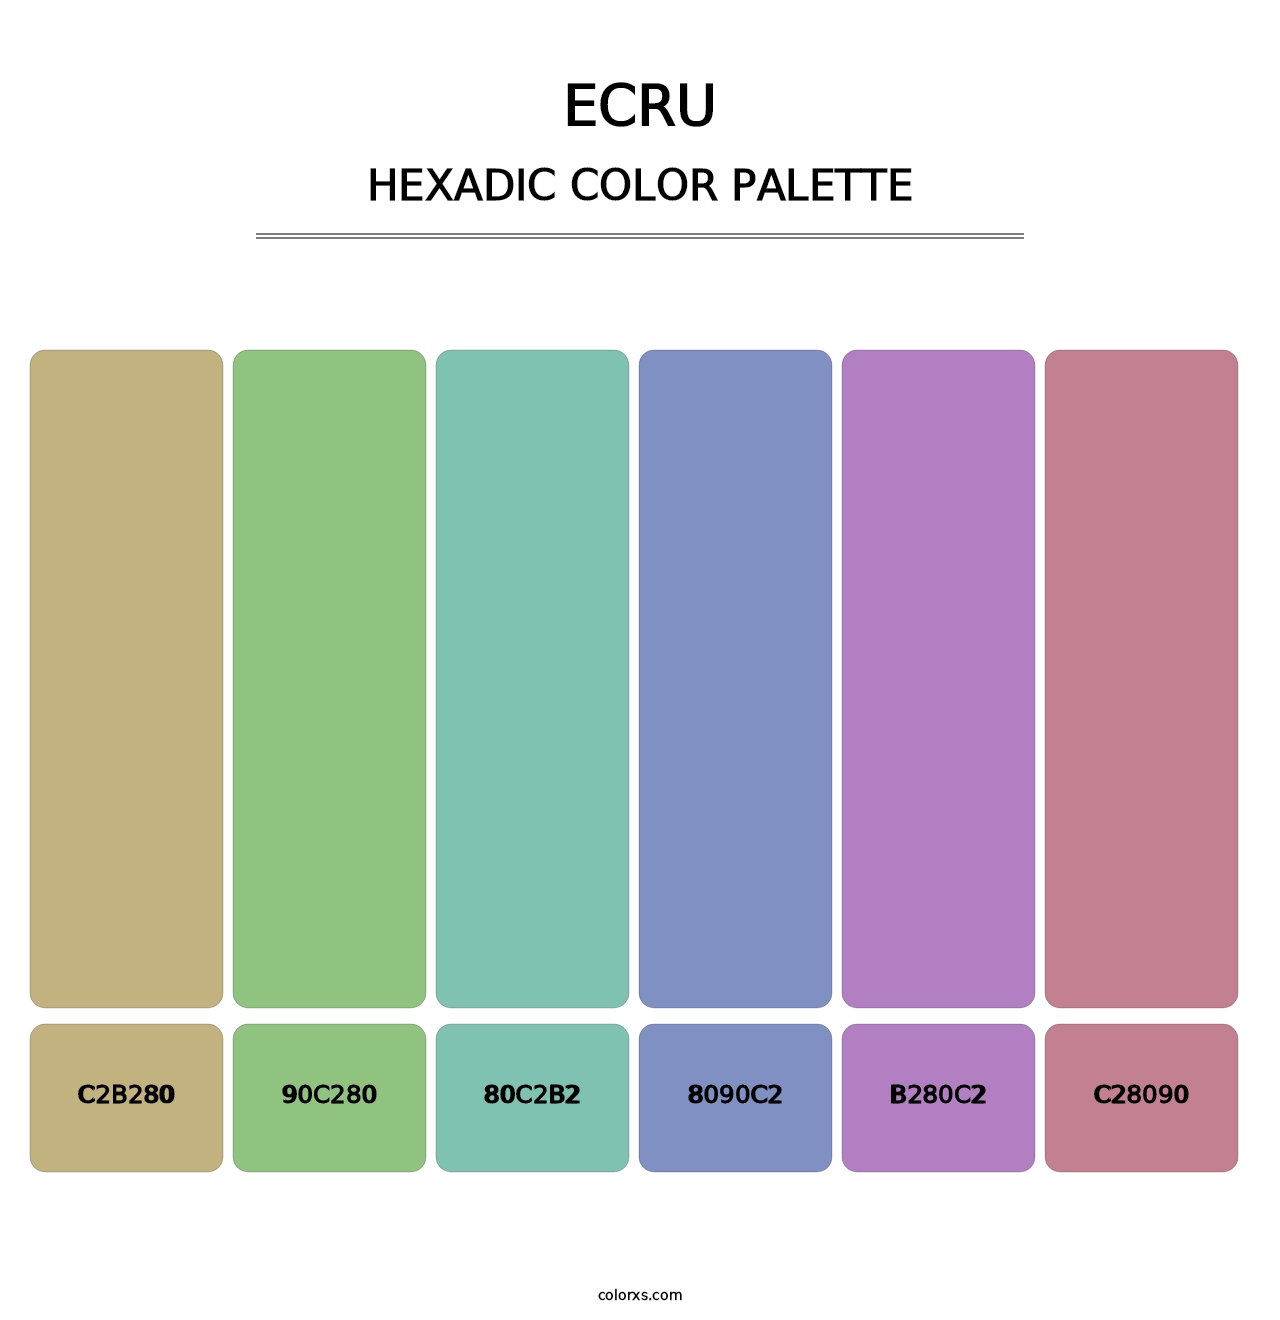 Ecru - Hexadic Color Palette